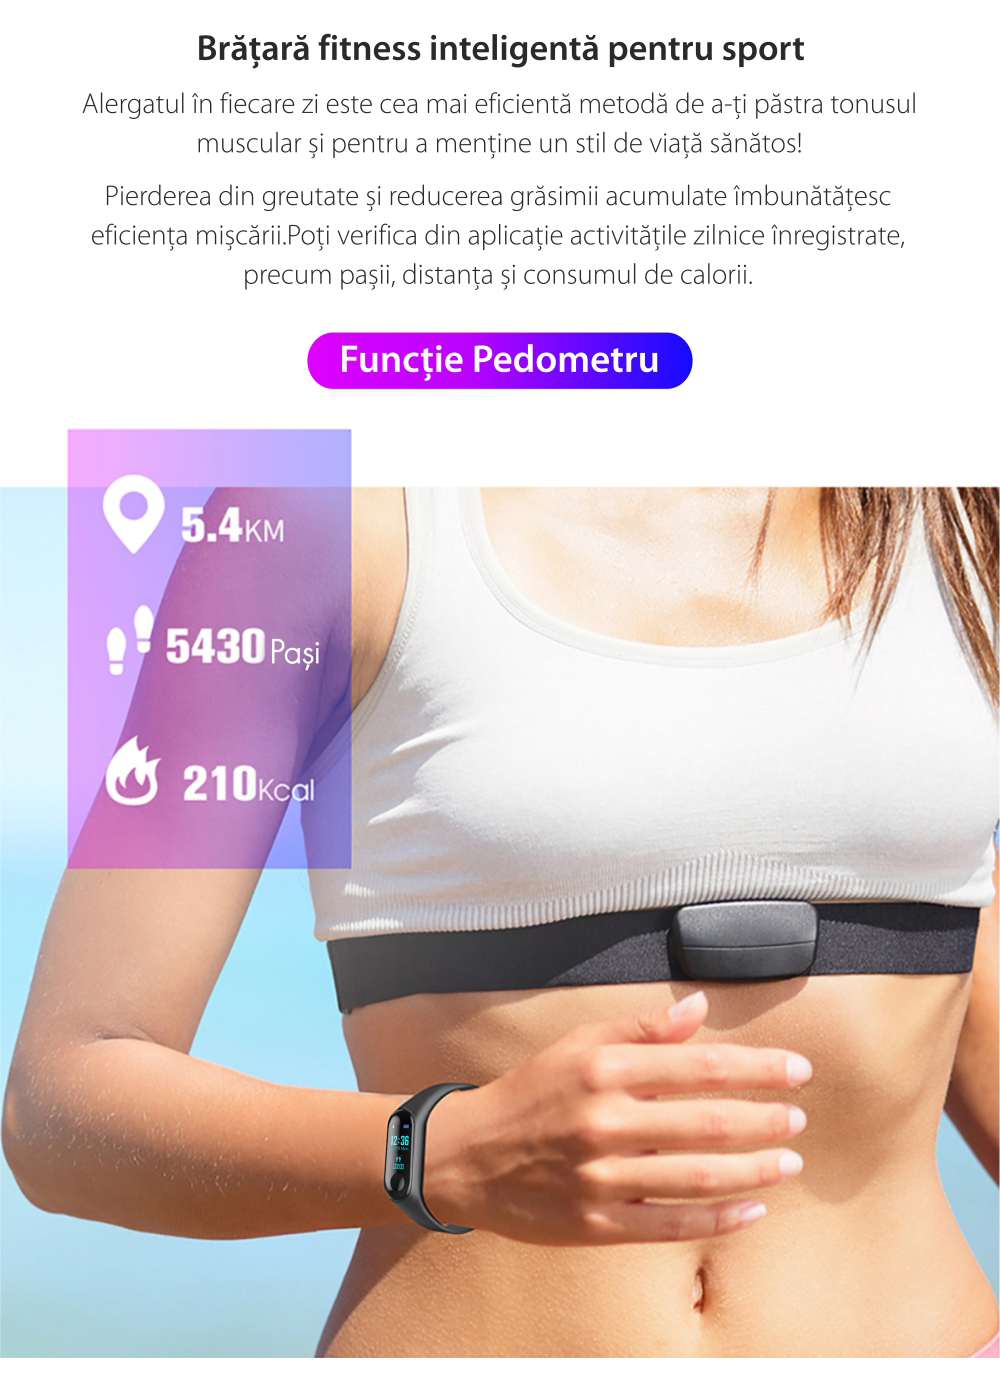 Bratara fitness inteligenta M3 cu masurarea tensiunii arteriale, Ritm cardiac, Notificari, Pedometru, Bluetooth – Albastra